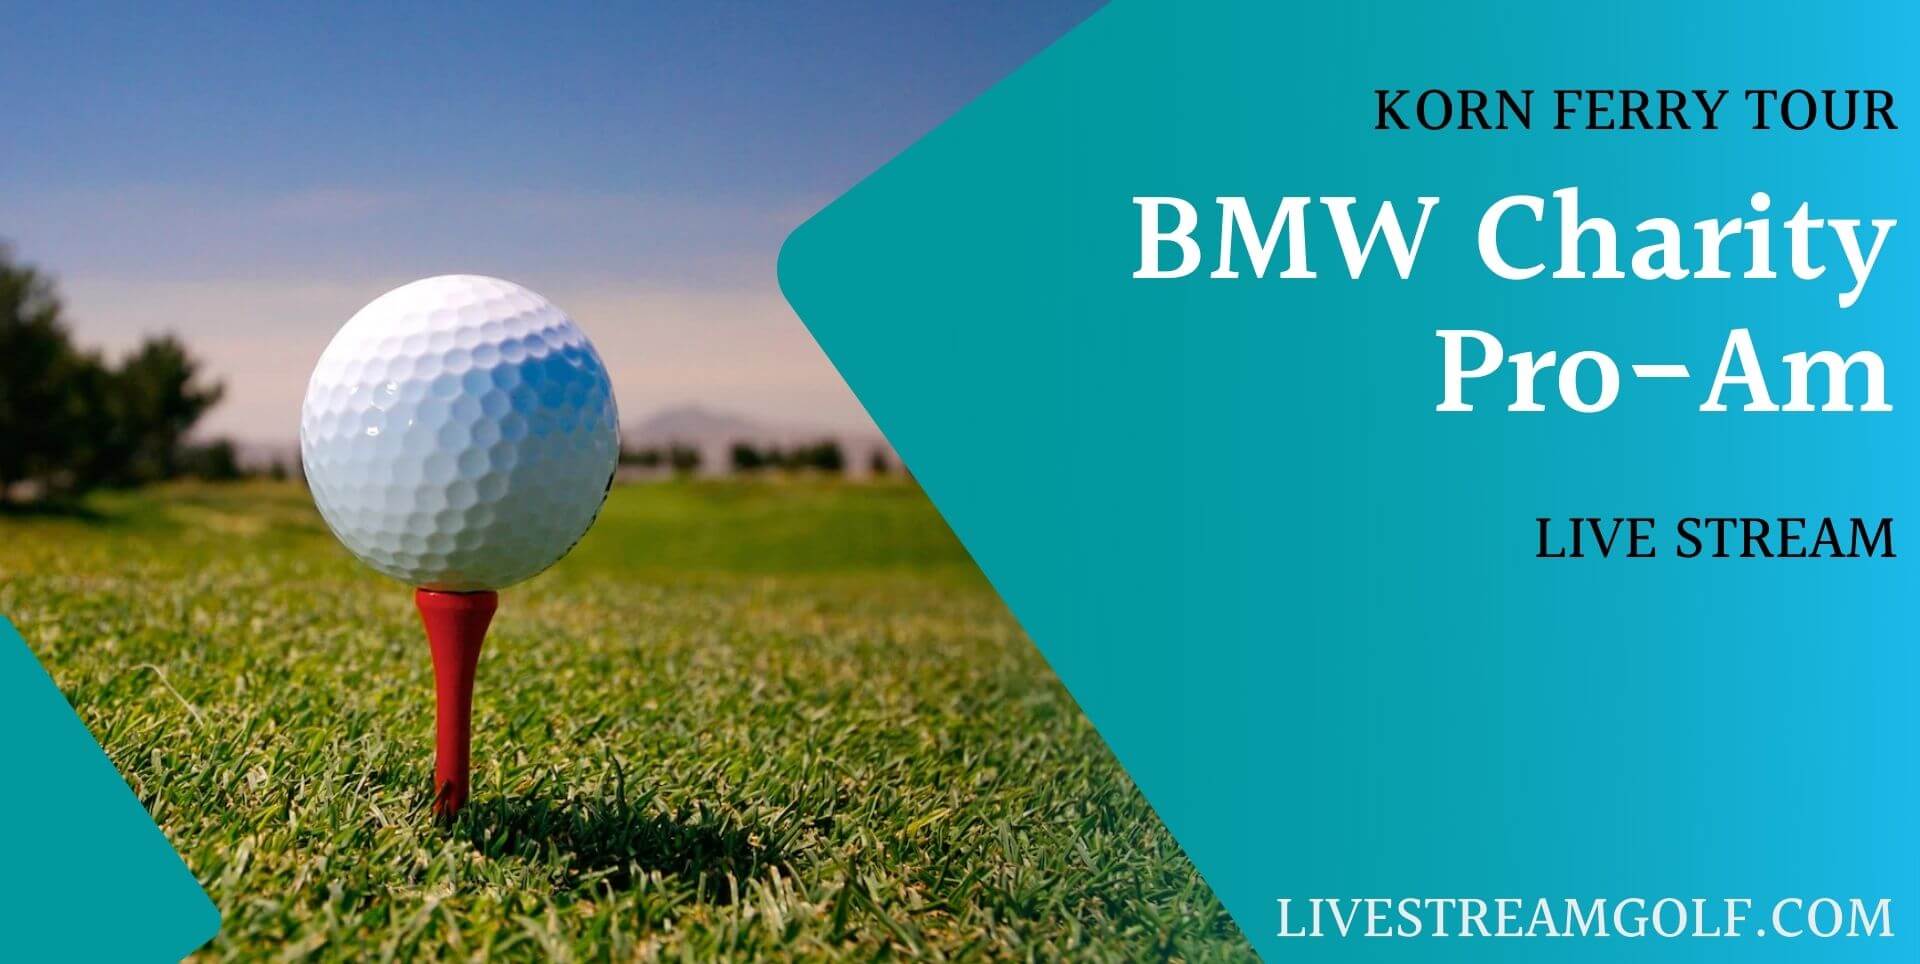 BMW Charity Pro-Am Day 1 Live Stream: Korn Ferry 2022